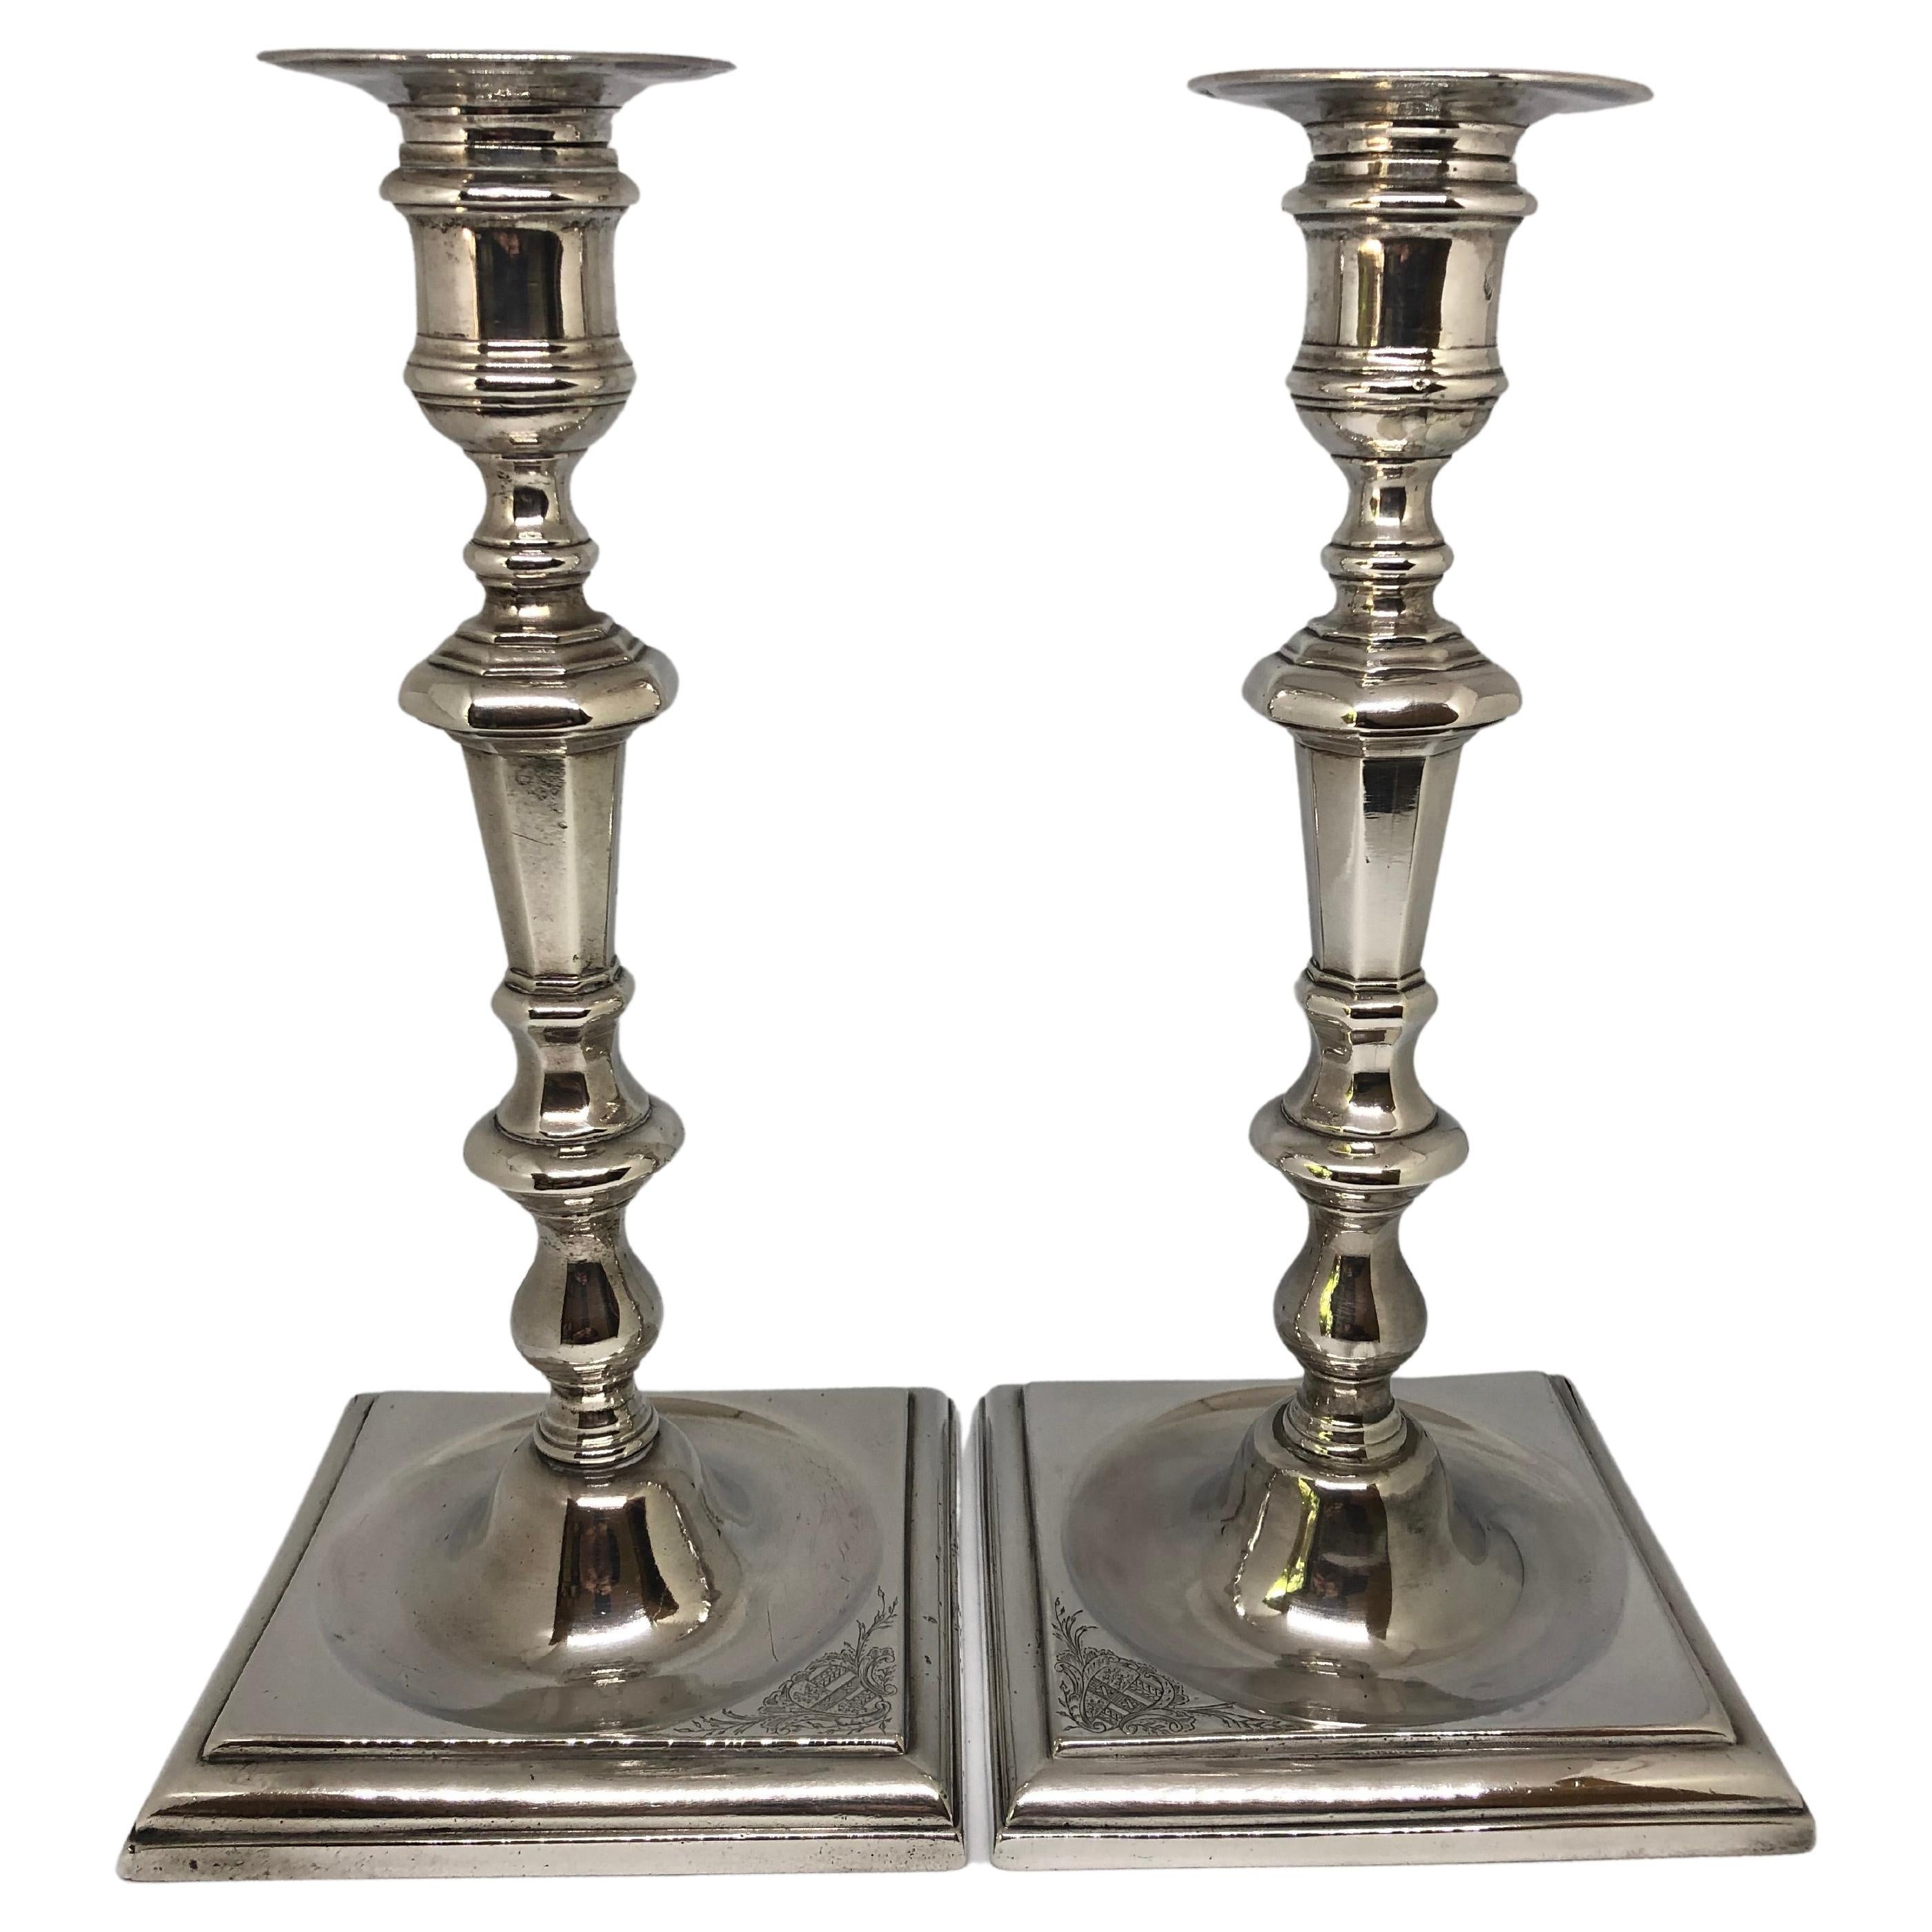 Very Rare Pair of Eighteenth-Century Irish Silver Cast Candlesticks, c.1760.